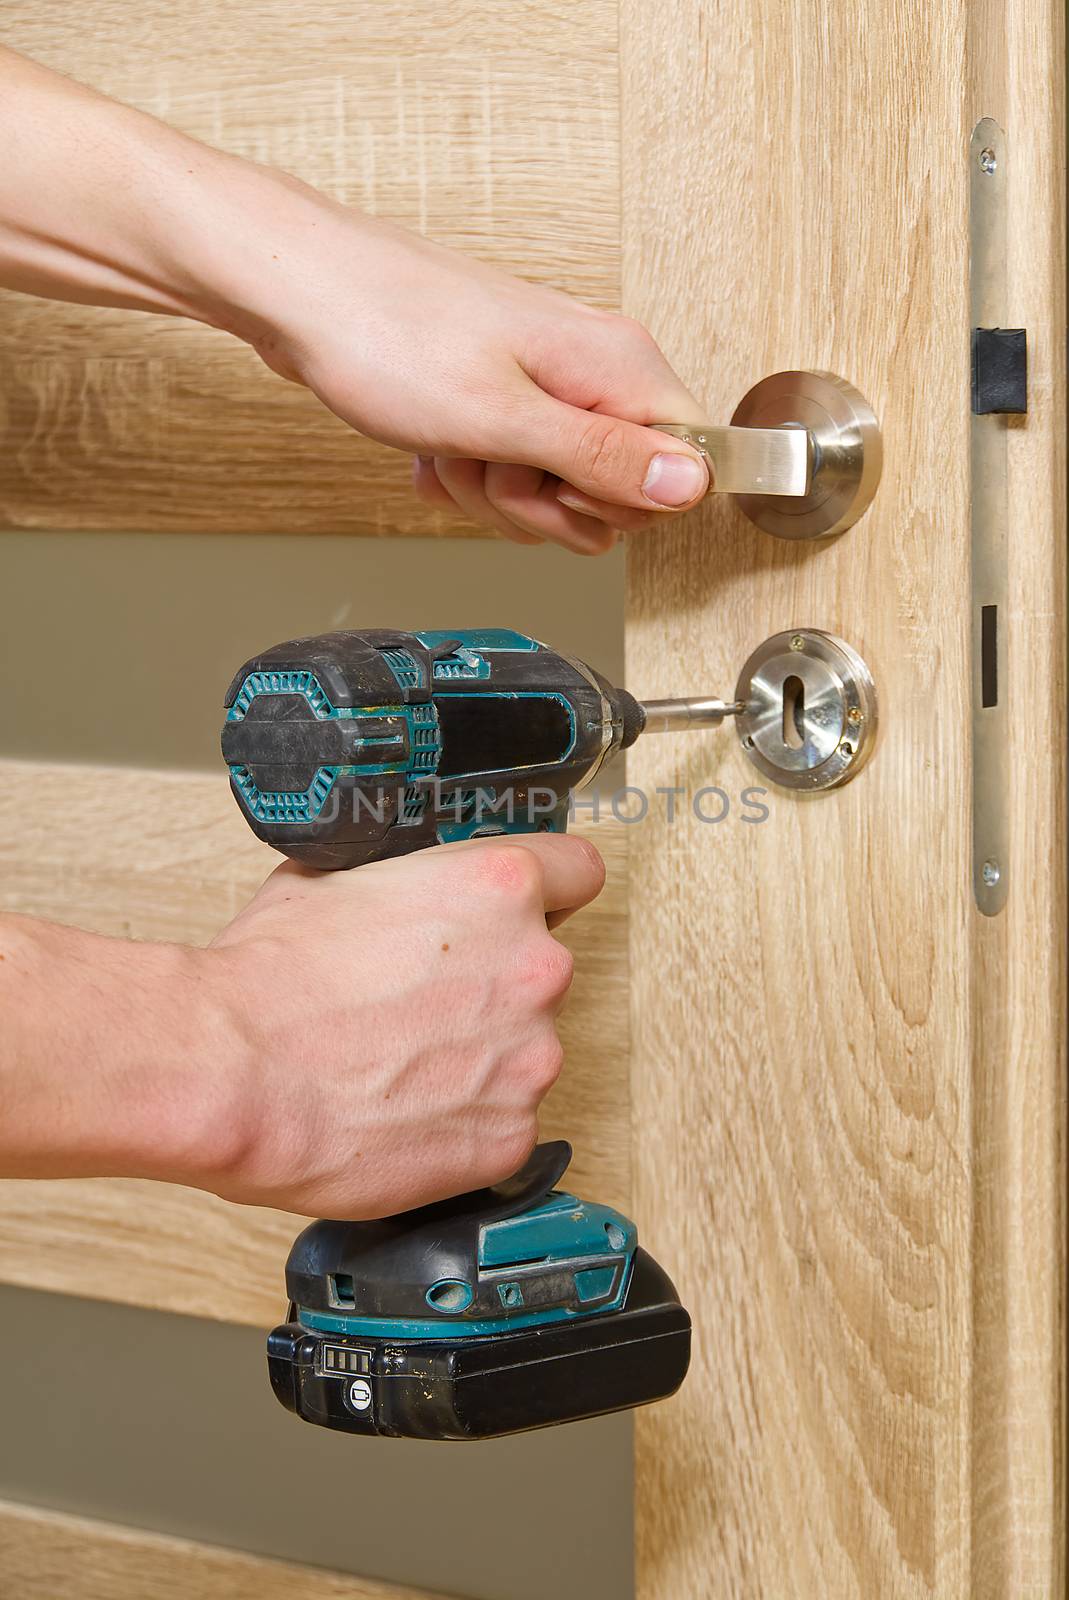 handyman repair the door lock in the room. man repairing the door handle furniture. carpenter at lock installation with electric drill into interior wood door by PhotoTime